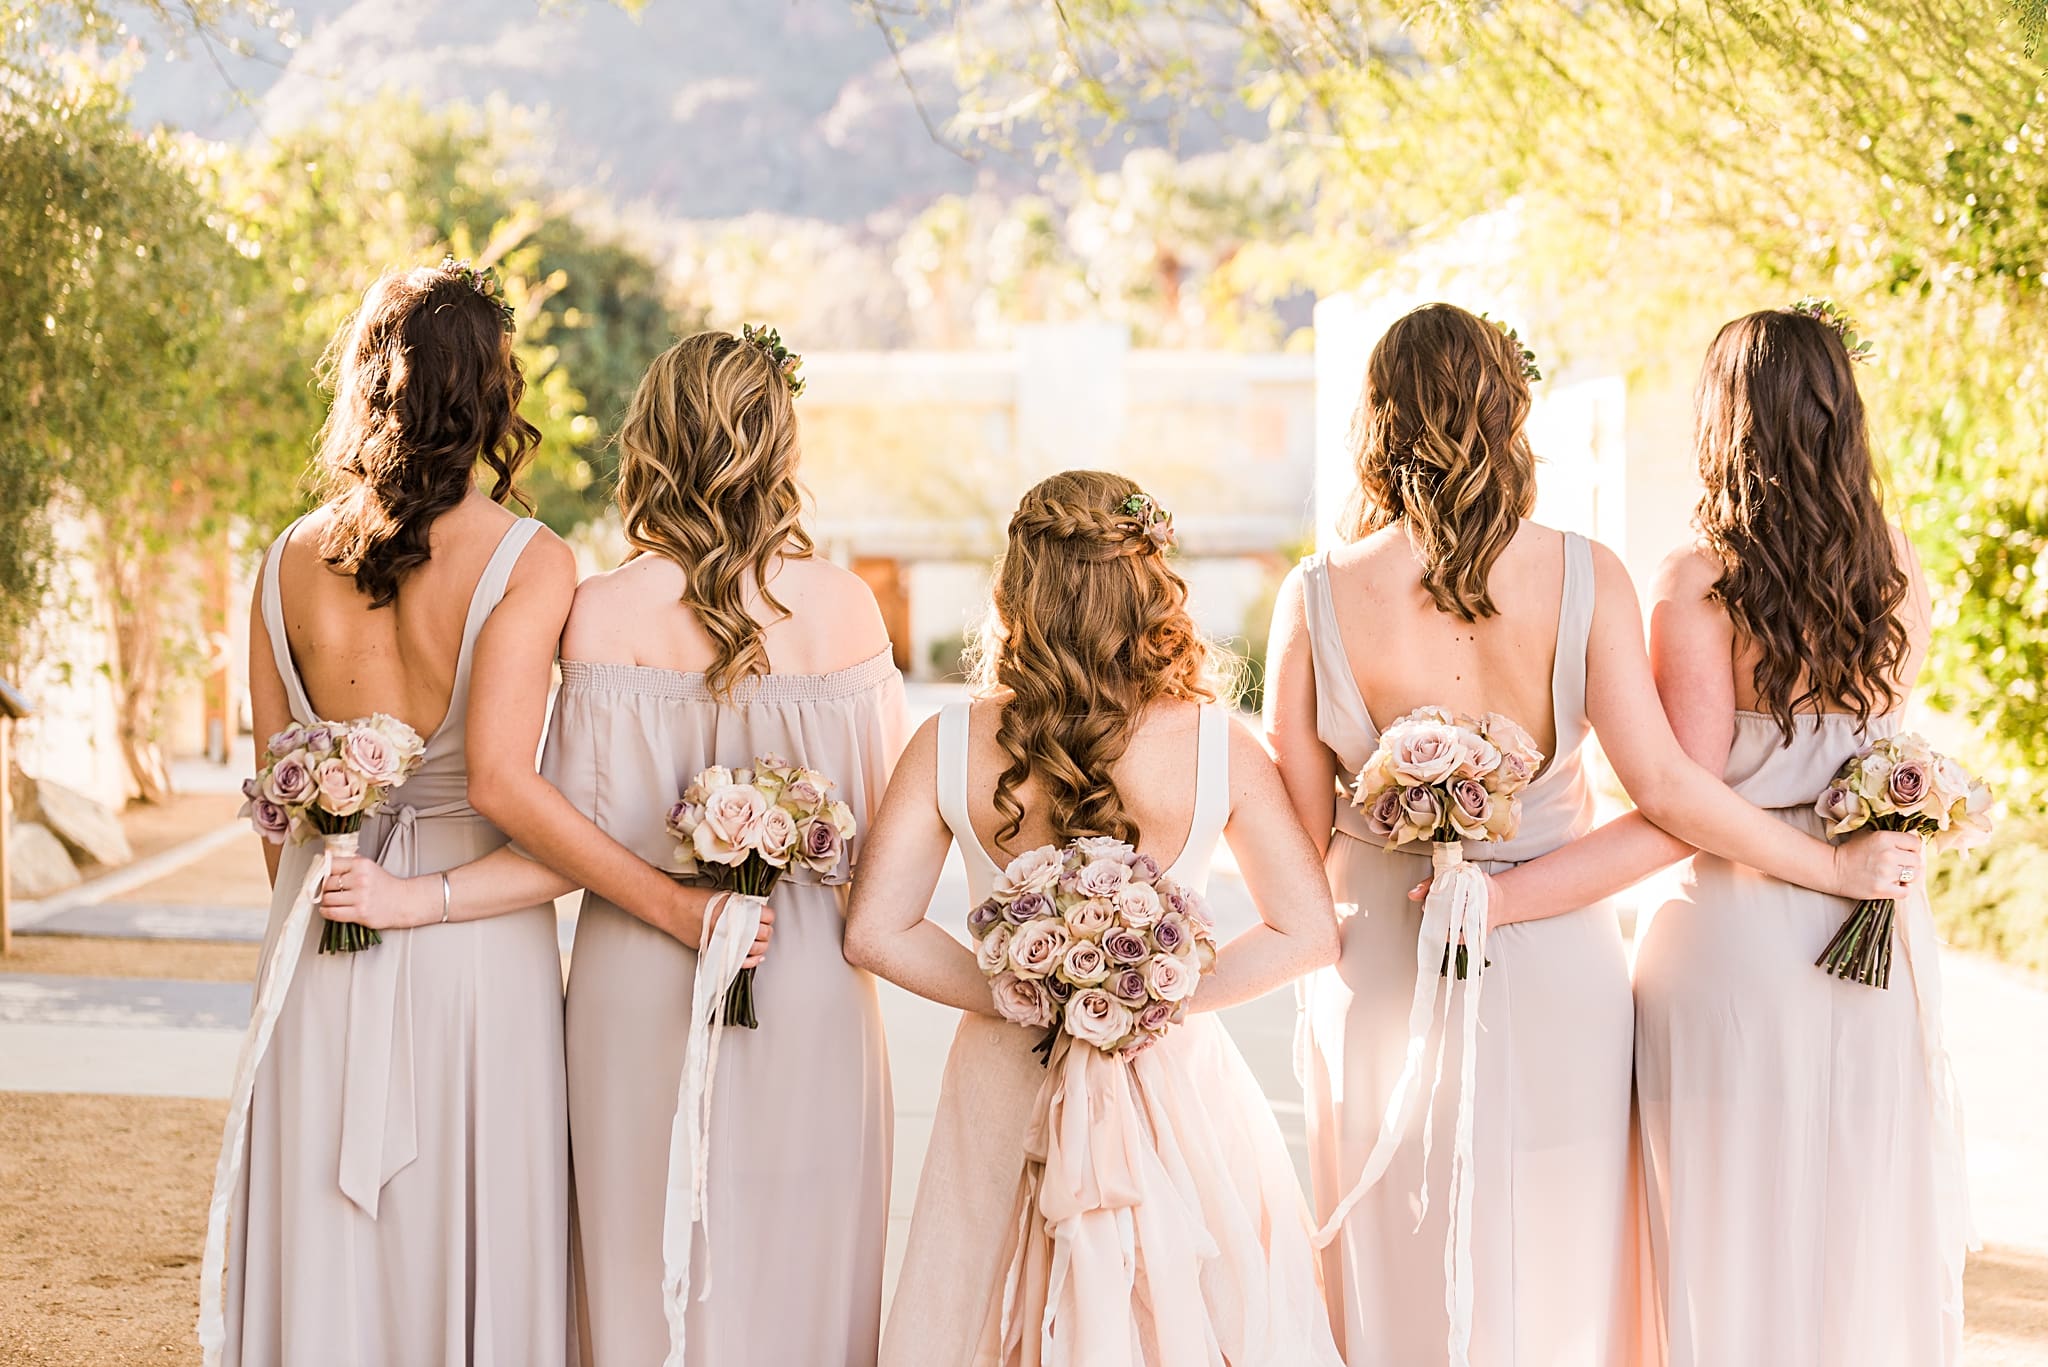 bridesmaids from behind